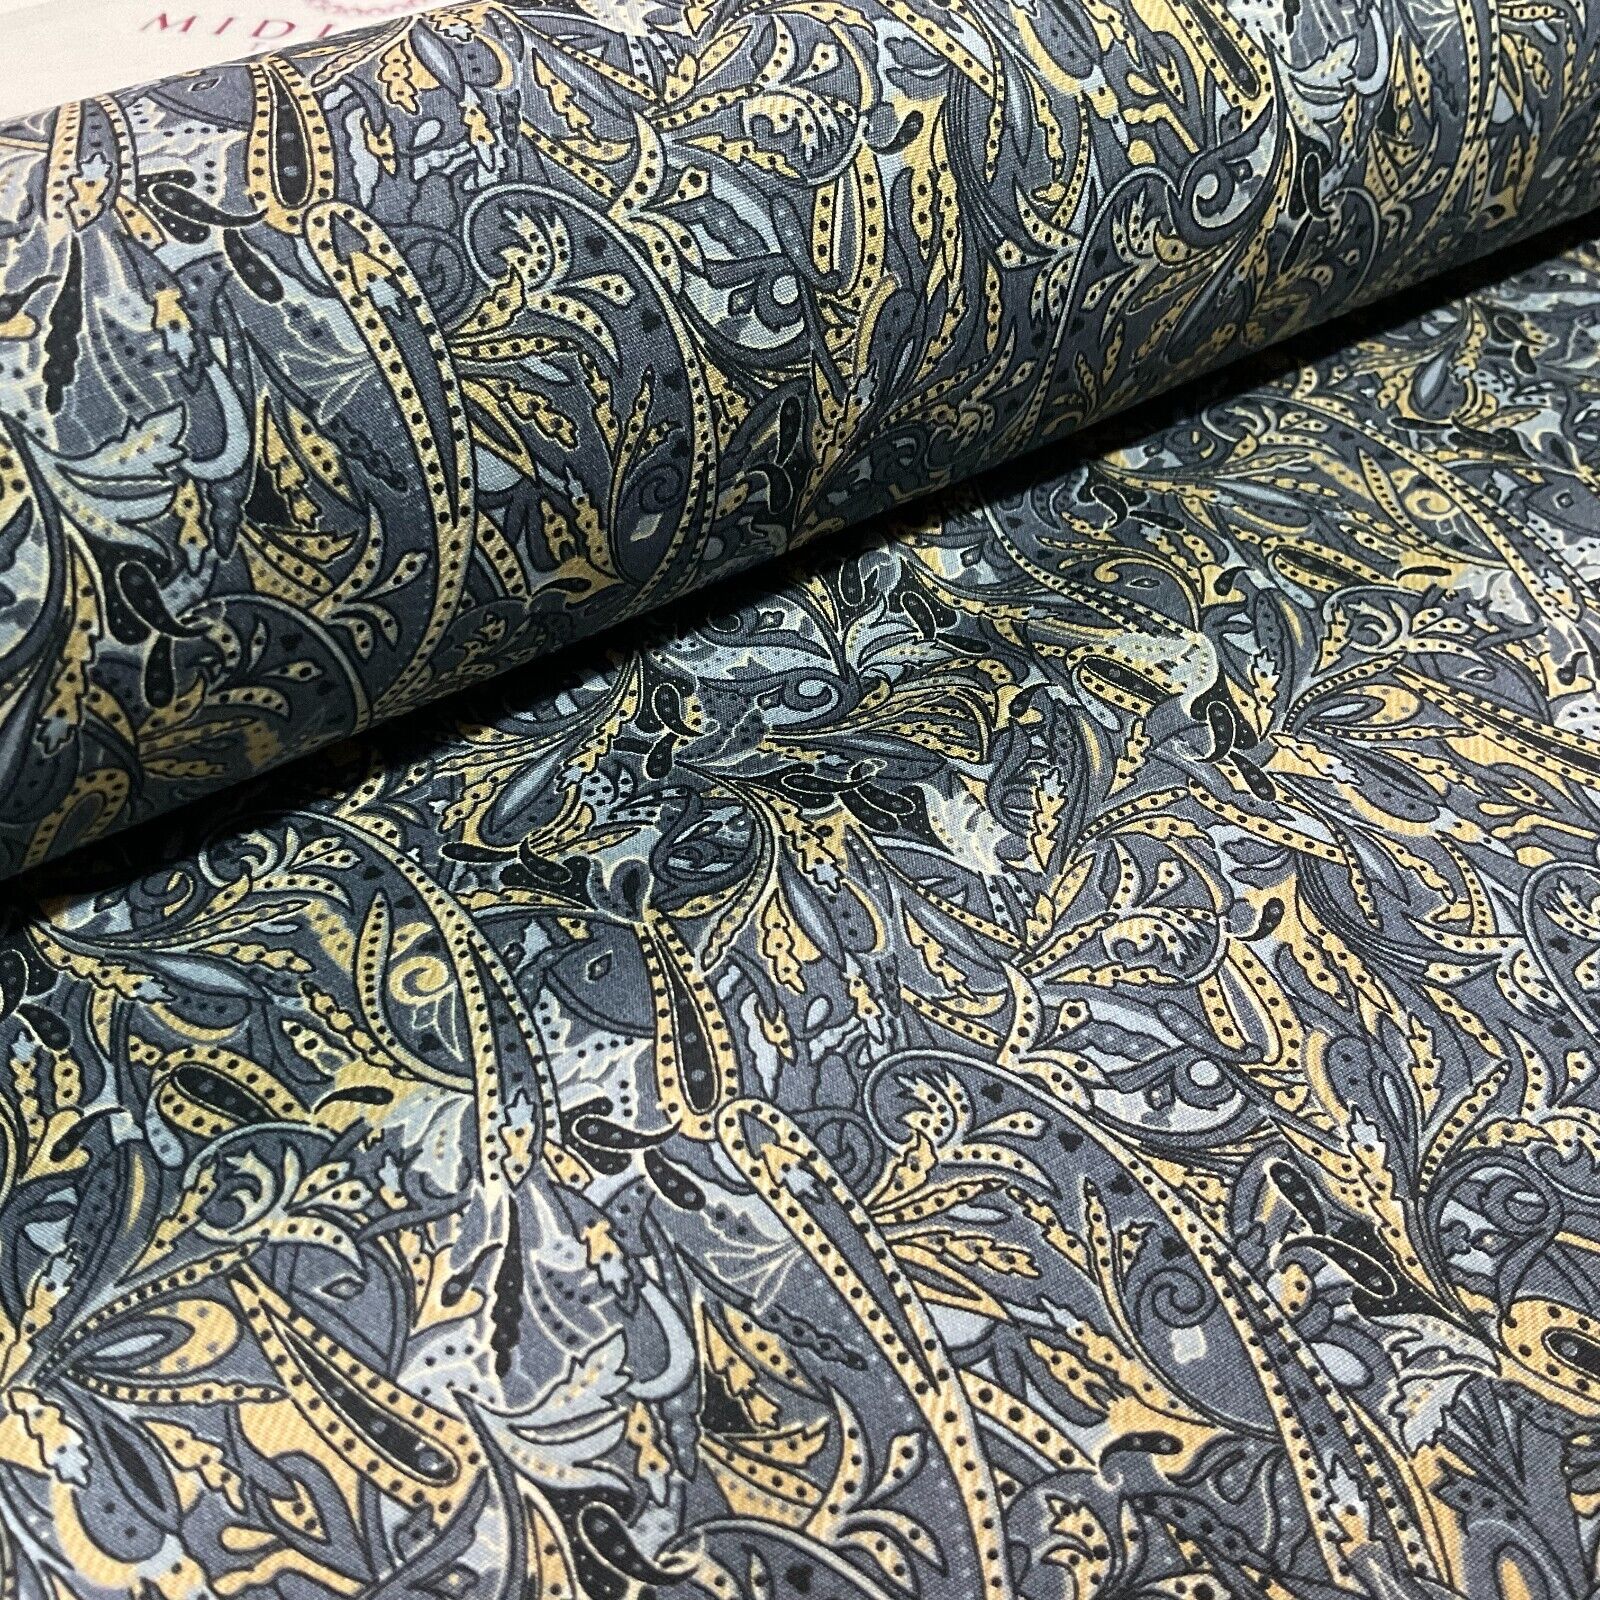 Vintage Paisley Cotton Poplin printed dress craft fabric 112cm wide M1743